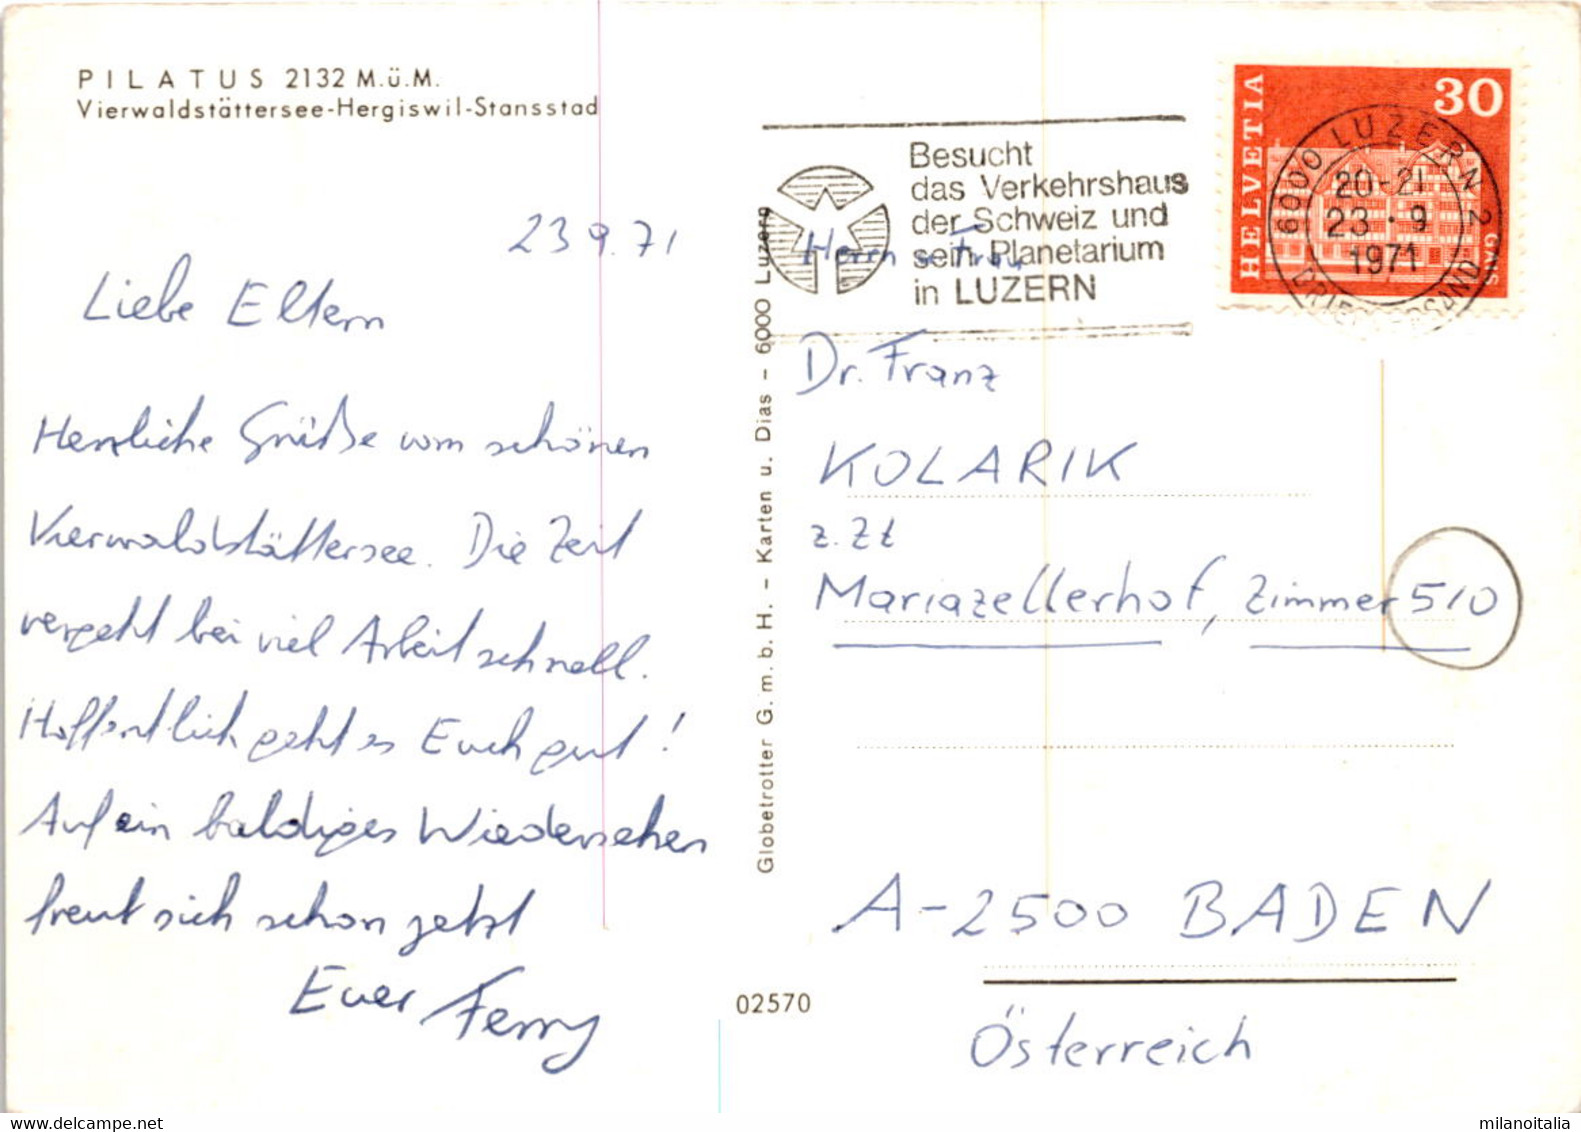 Pilatus - Vierwaldstättersee-Hergiswil-Stansstad (02570) * 23. 9. 1971 - Hergiswil